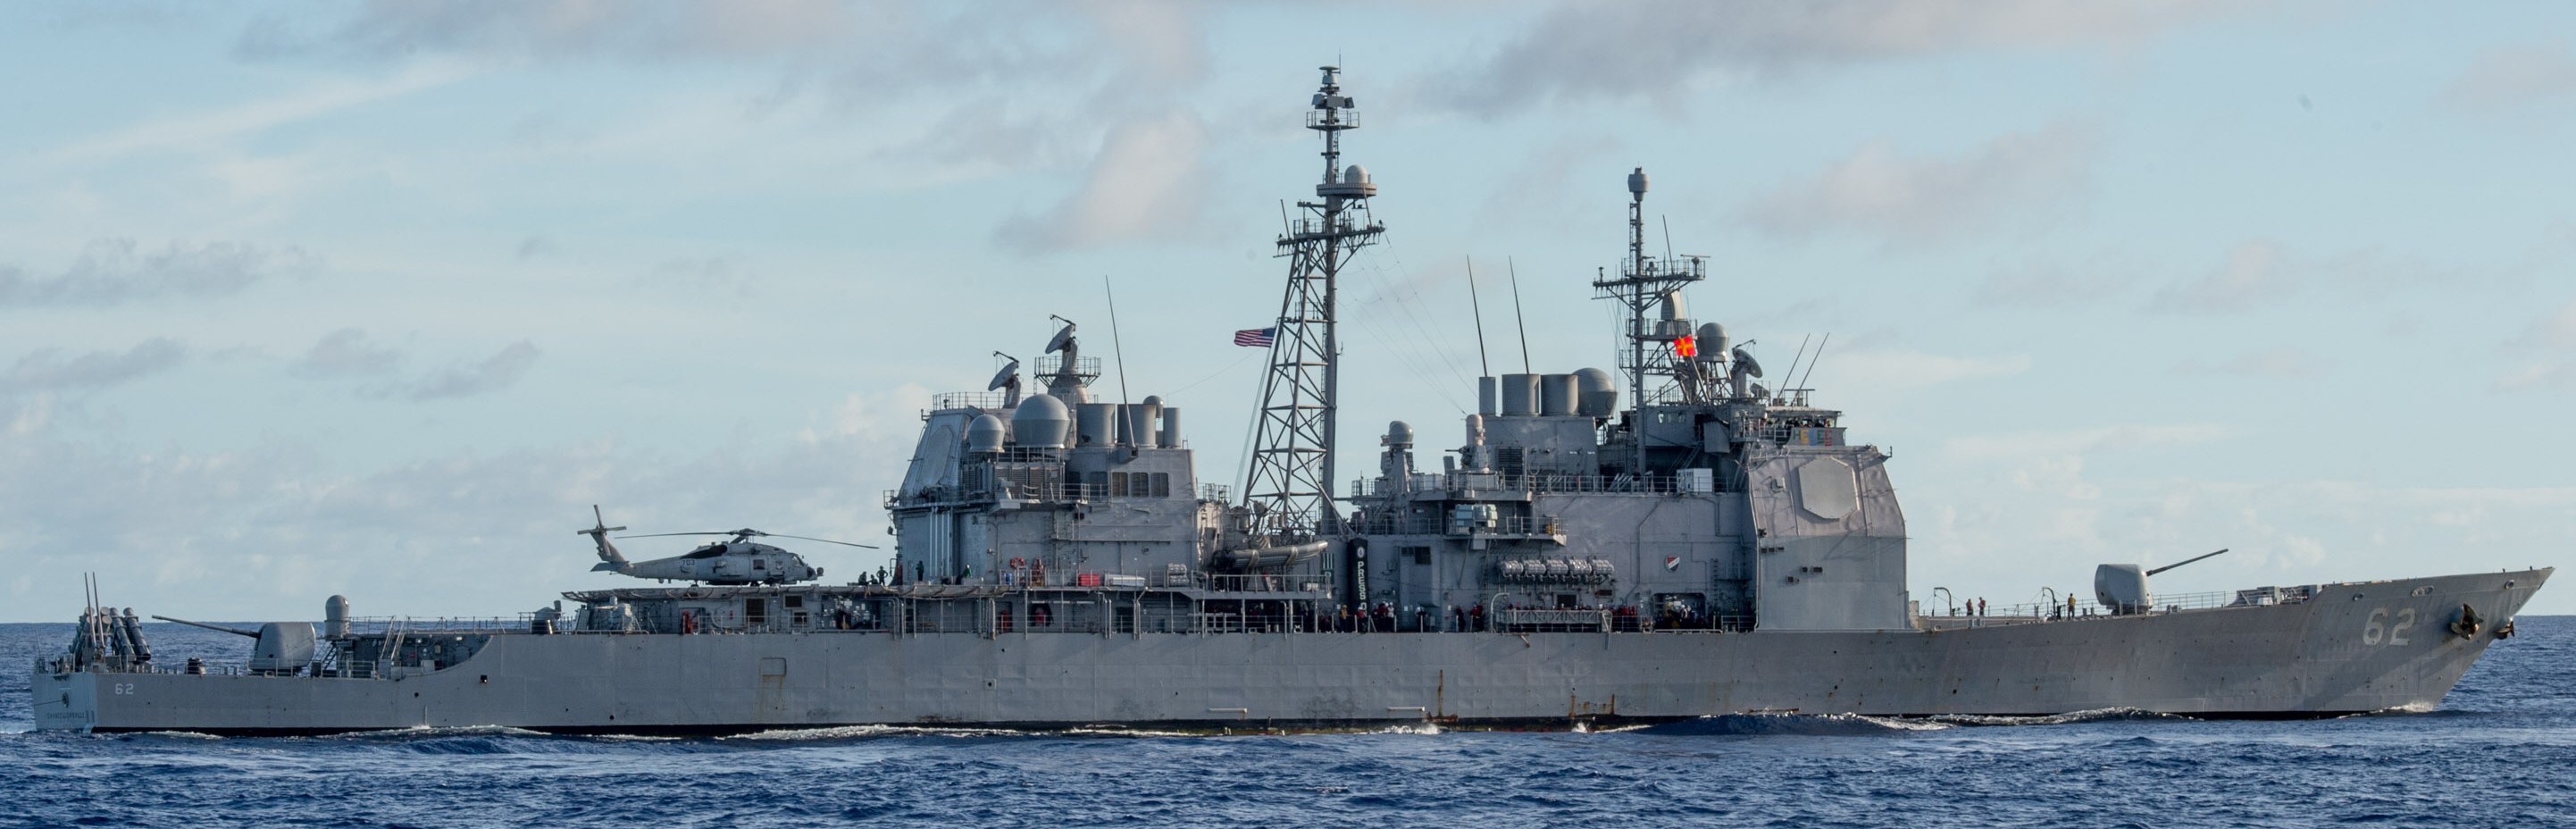 cg-62 uss chancellorsville ticonderoga class guided missile cruiser aegis us navy philippine sea 59